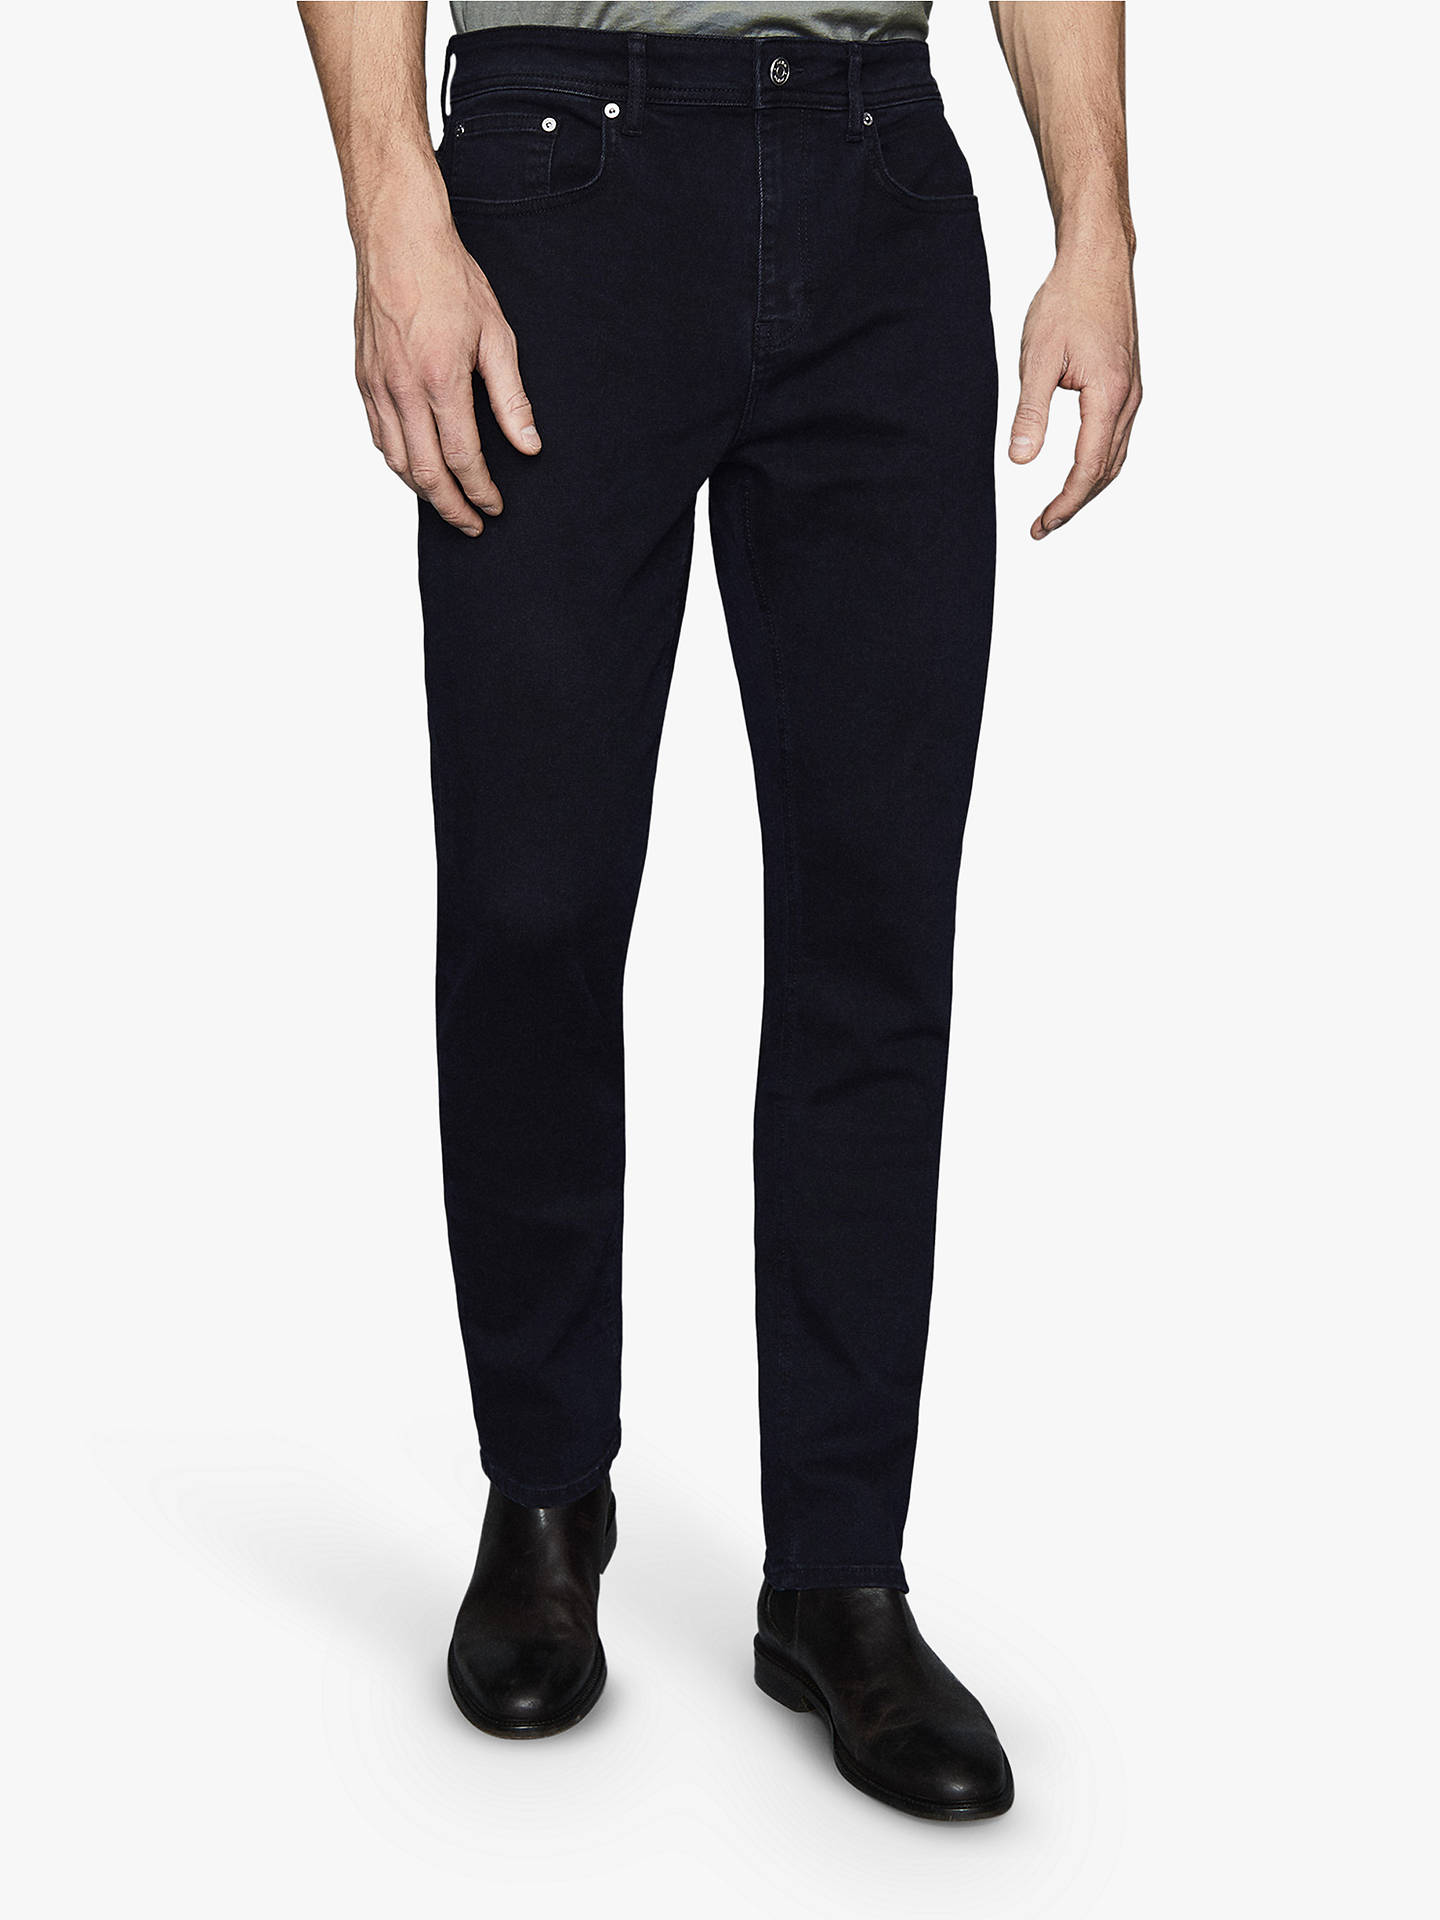 Reiss Bruce Slim Fit Jeans, Navy at John Lewis & Partners